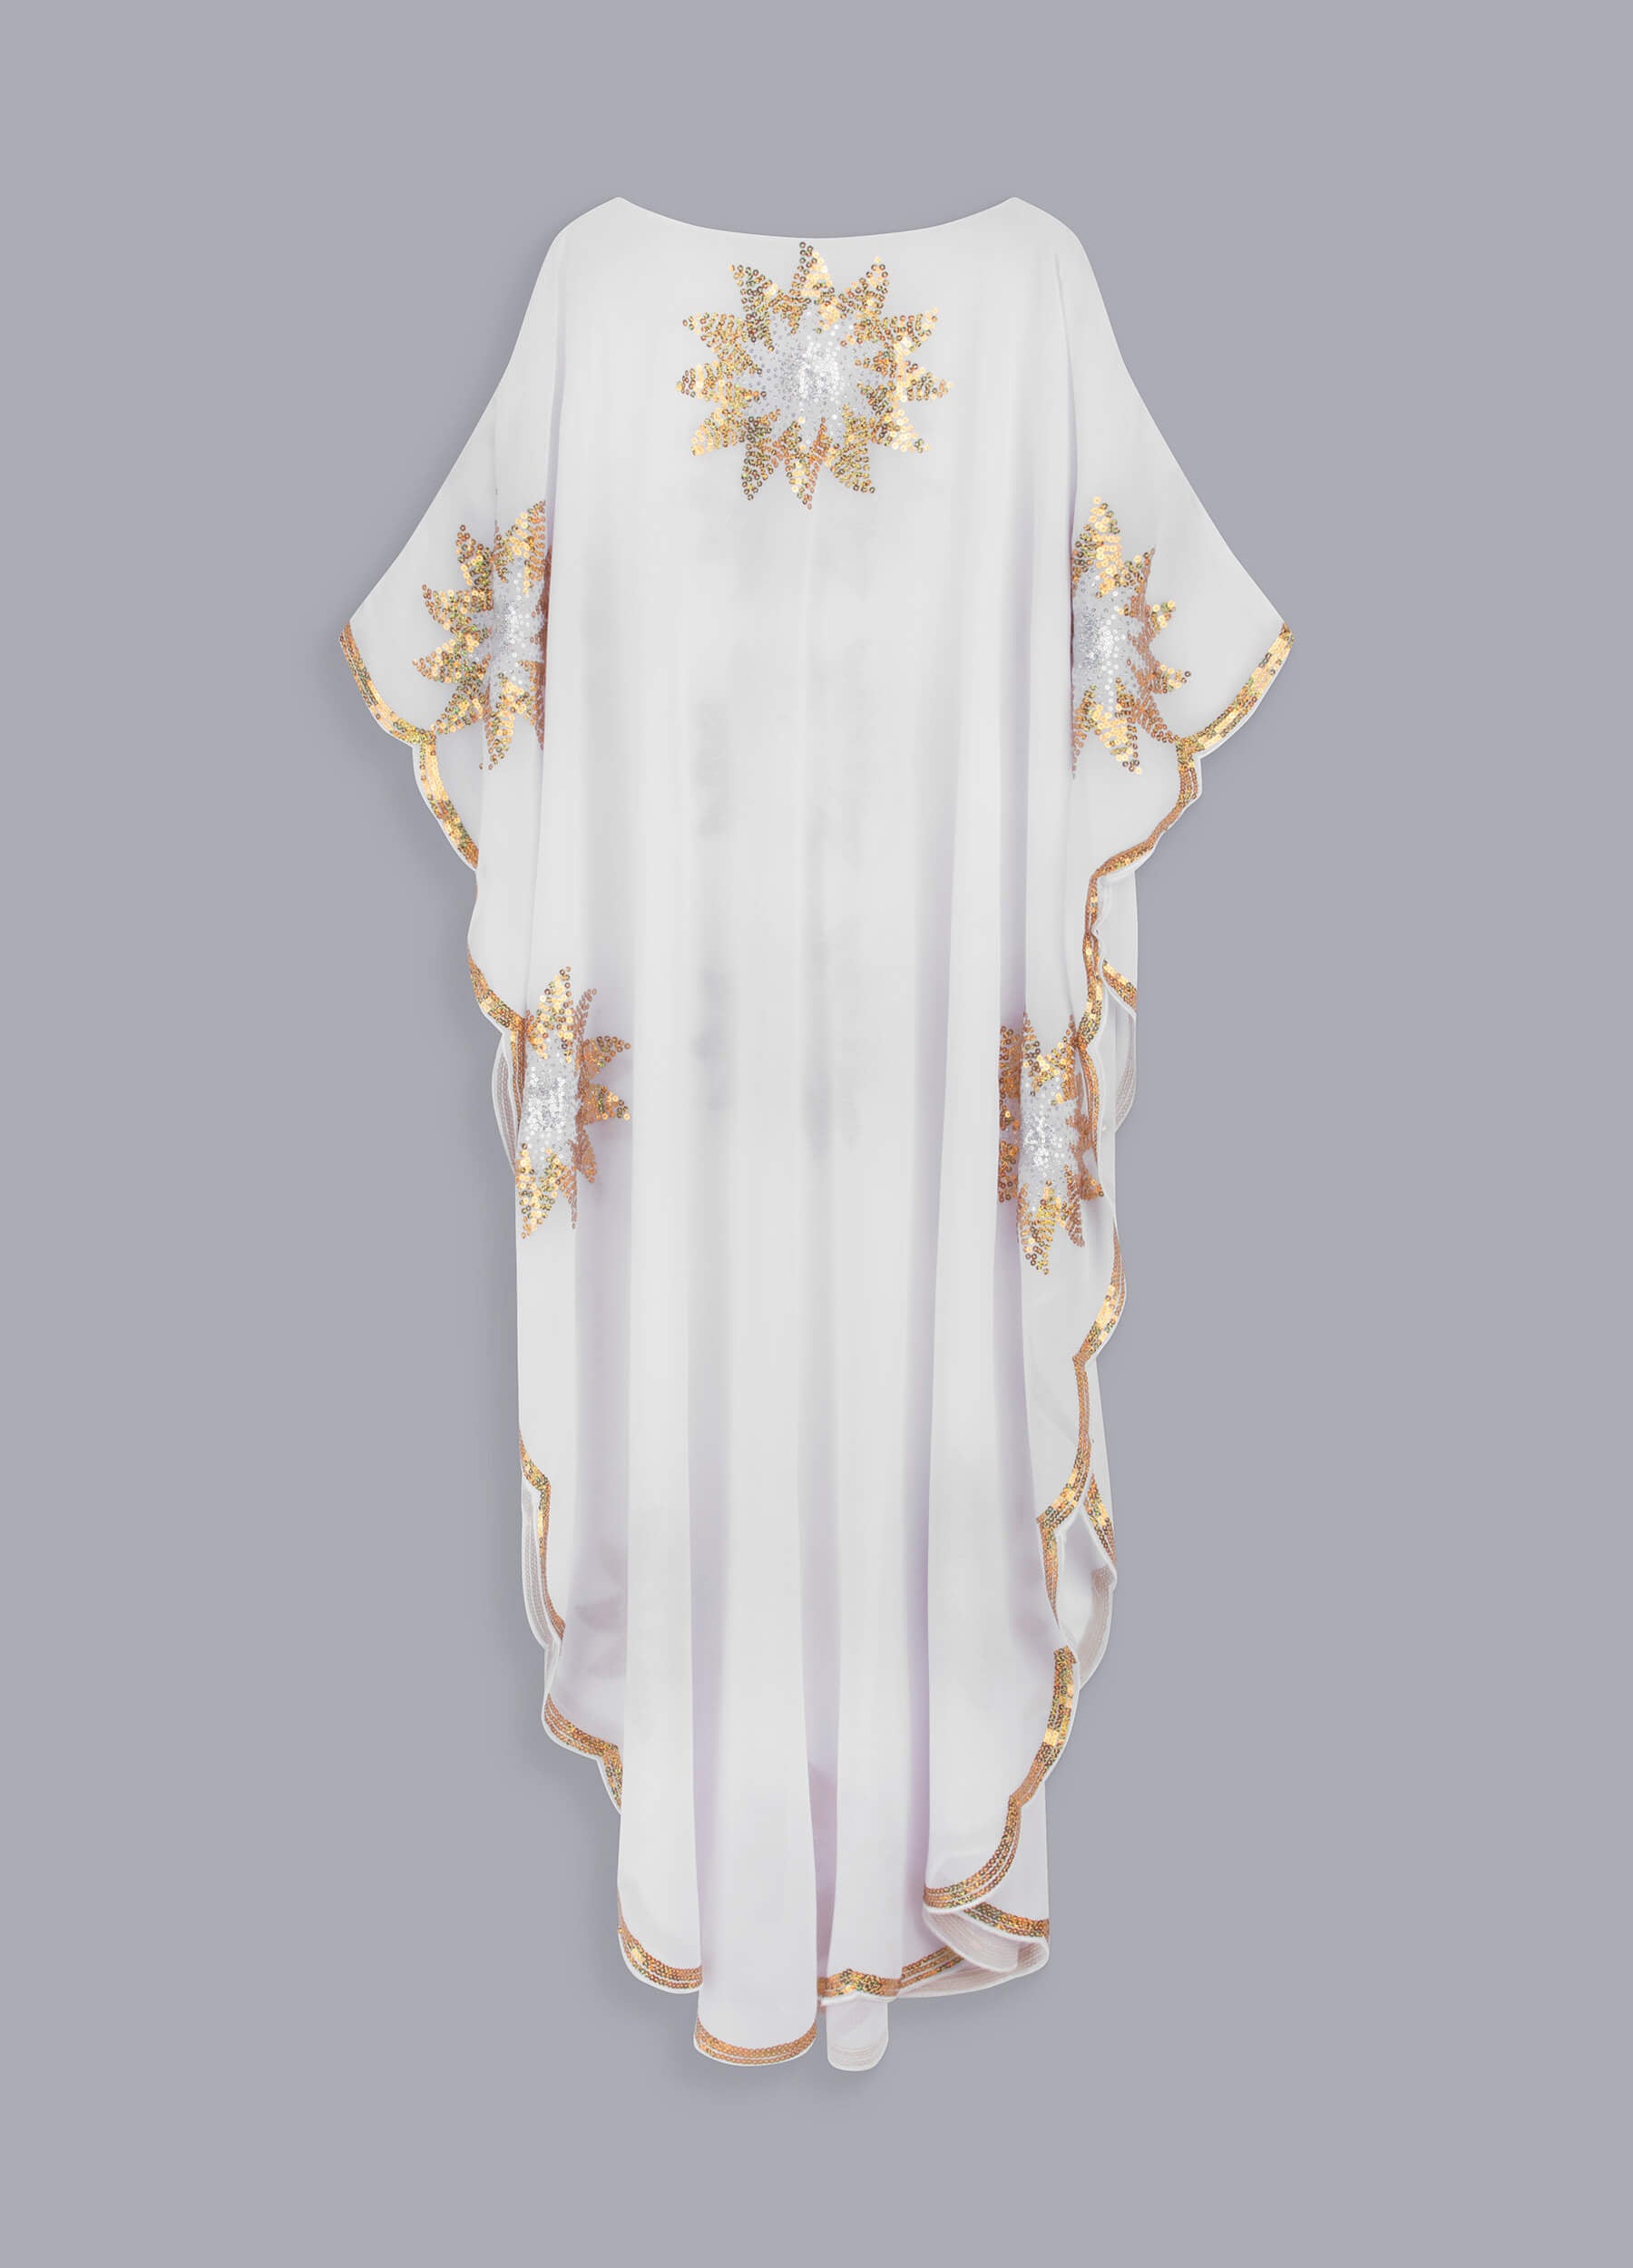 Women's Round Neck Half Sleeve Floral Sequin Glitter Kaftan-White back view